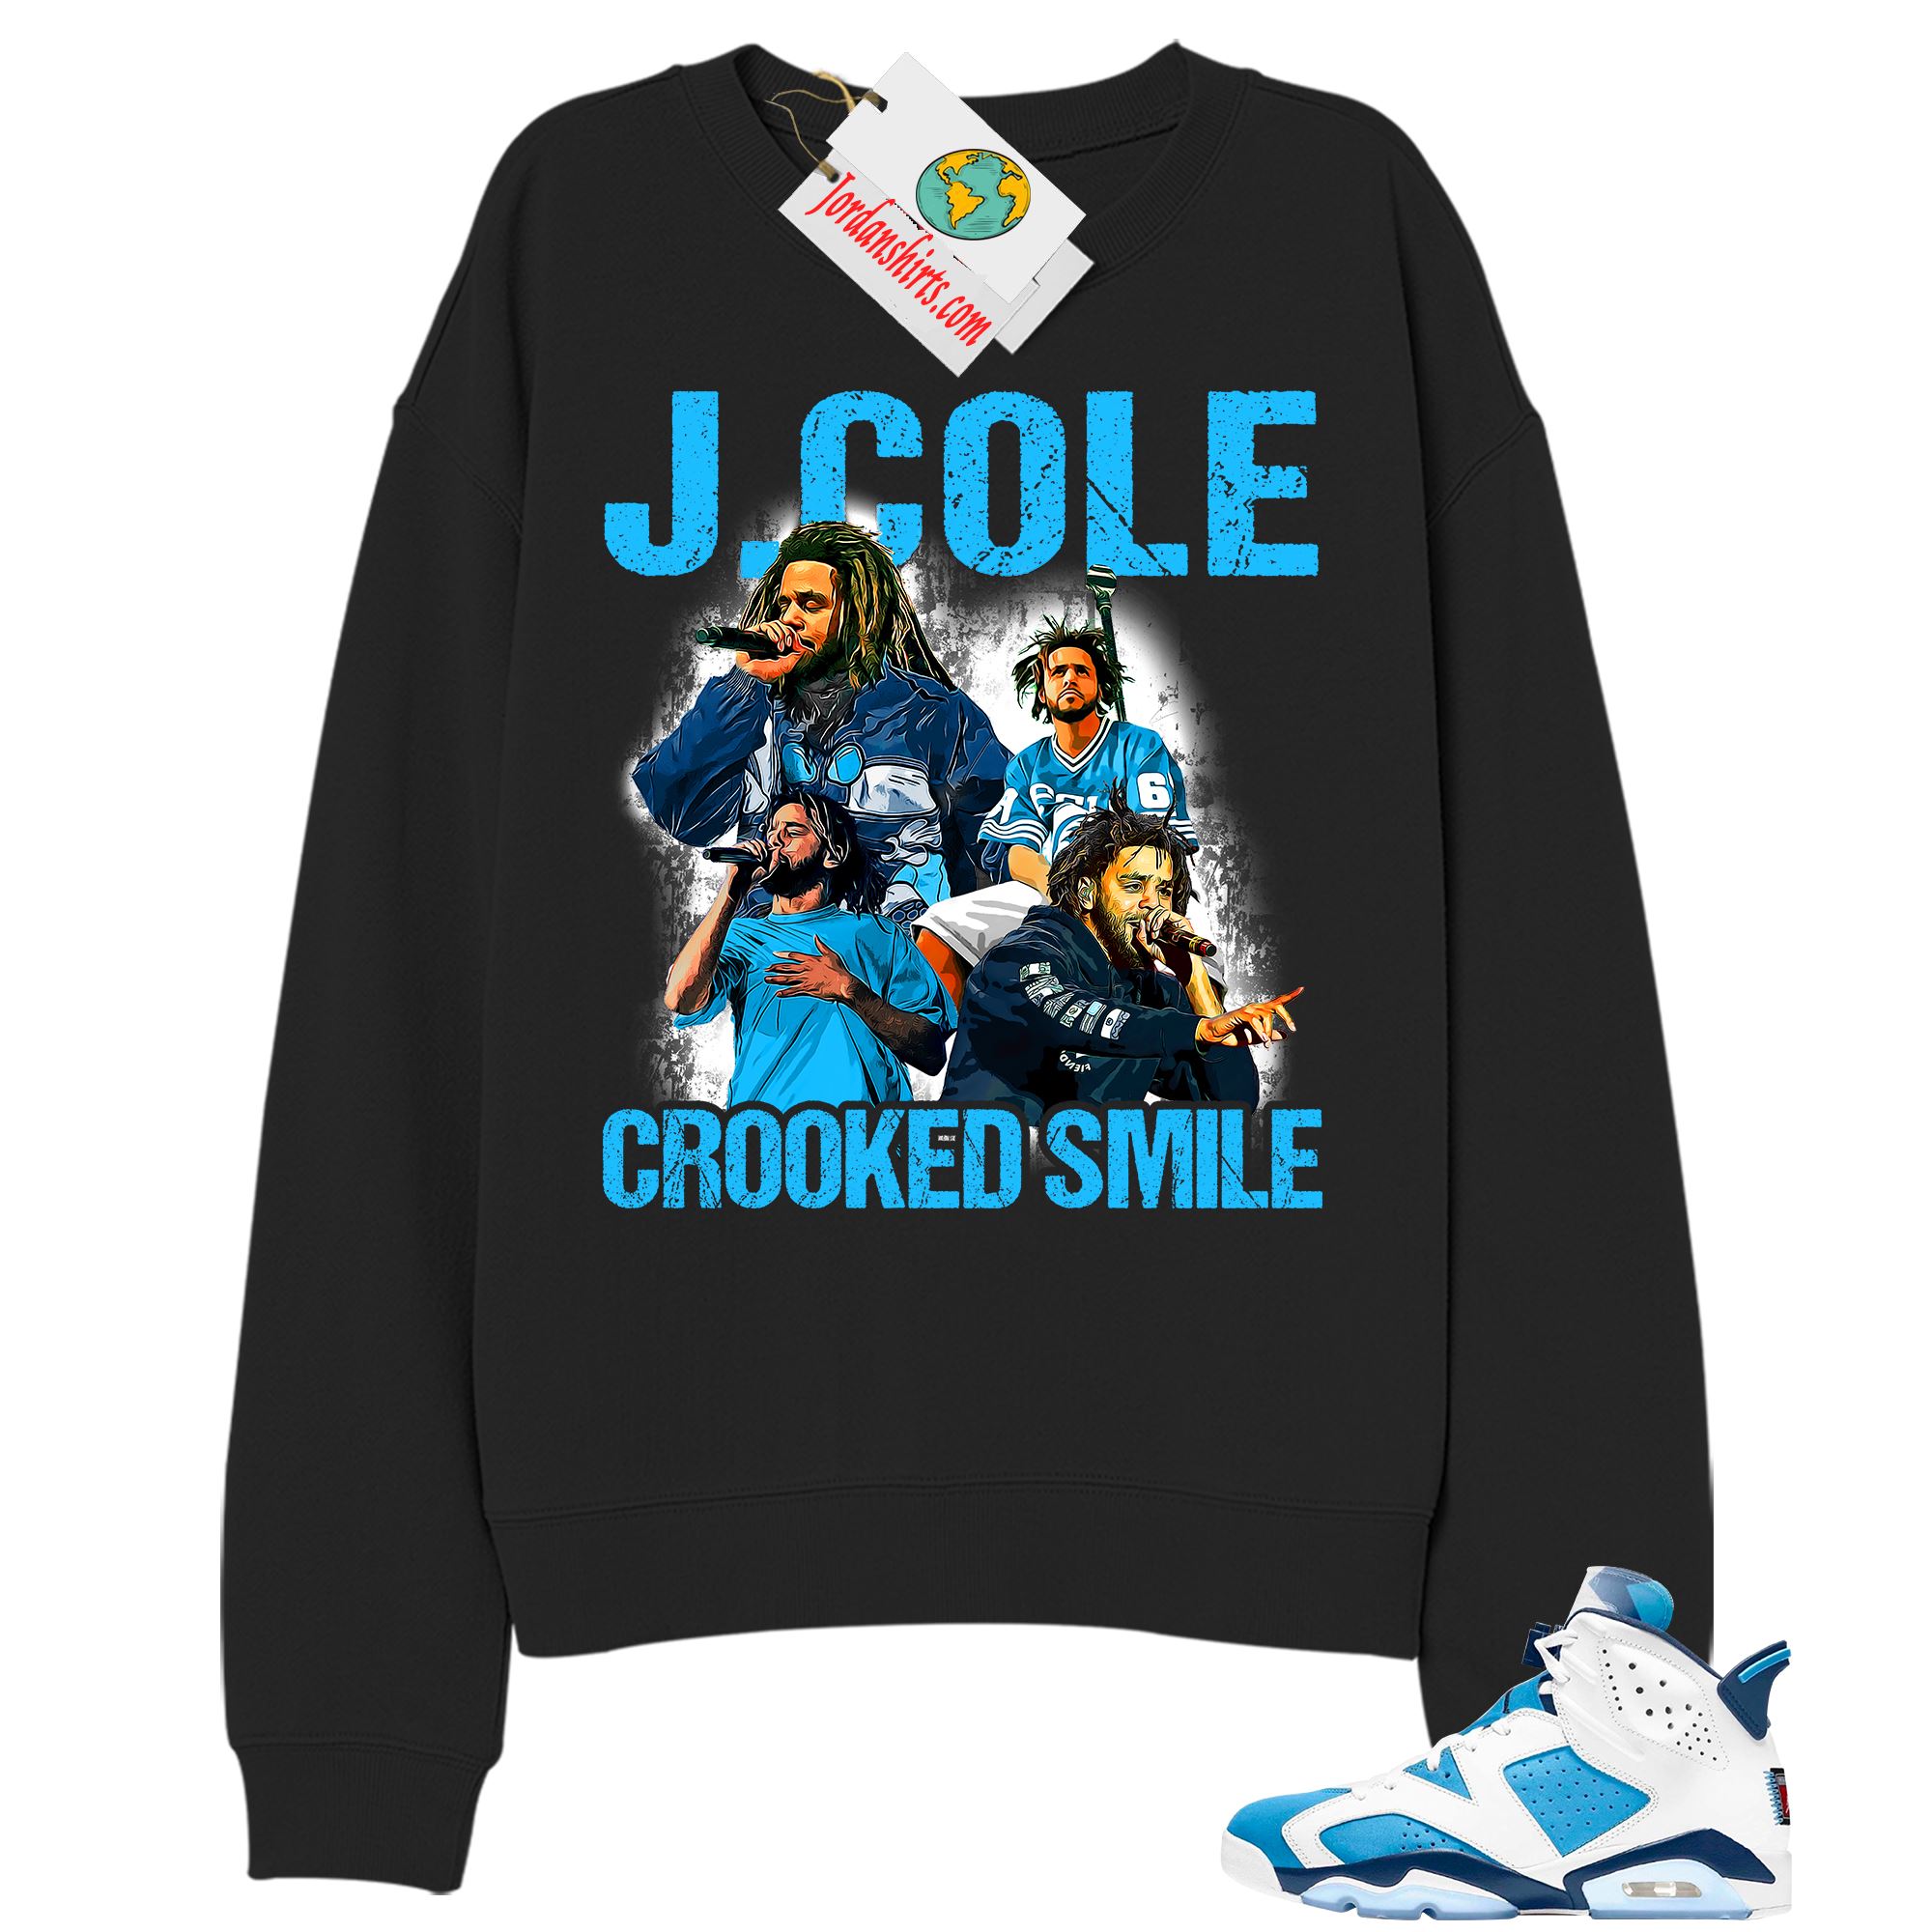 Jordan 6 Sweatshirt, J Cole Bootleg Vintage Raptee Black Sweatshirt Air Jordan 6 Unc 6s Size Up To 5xl